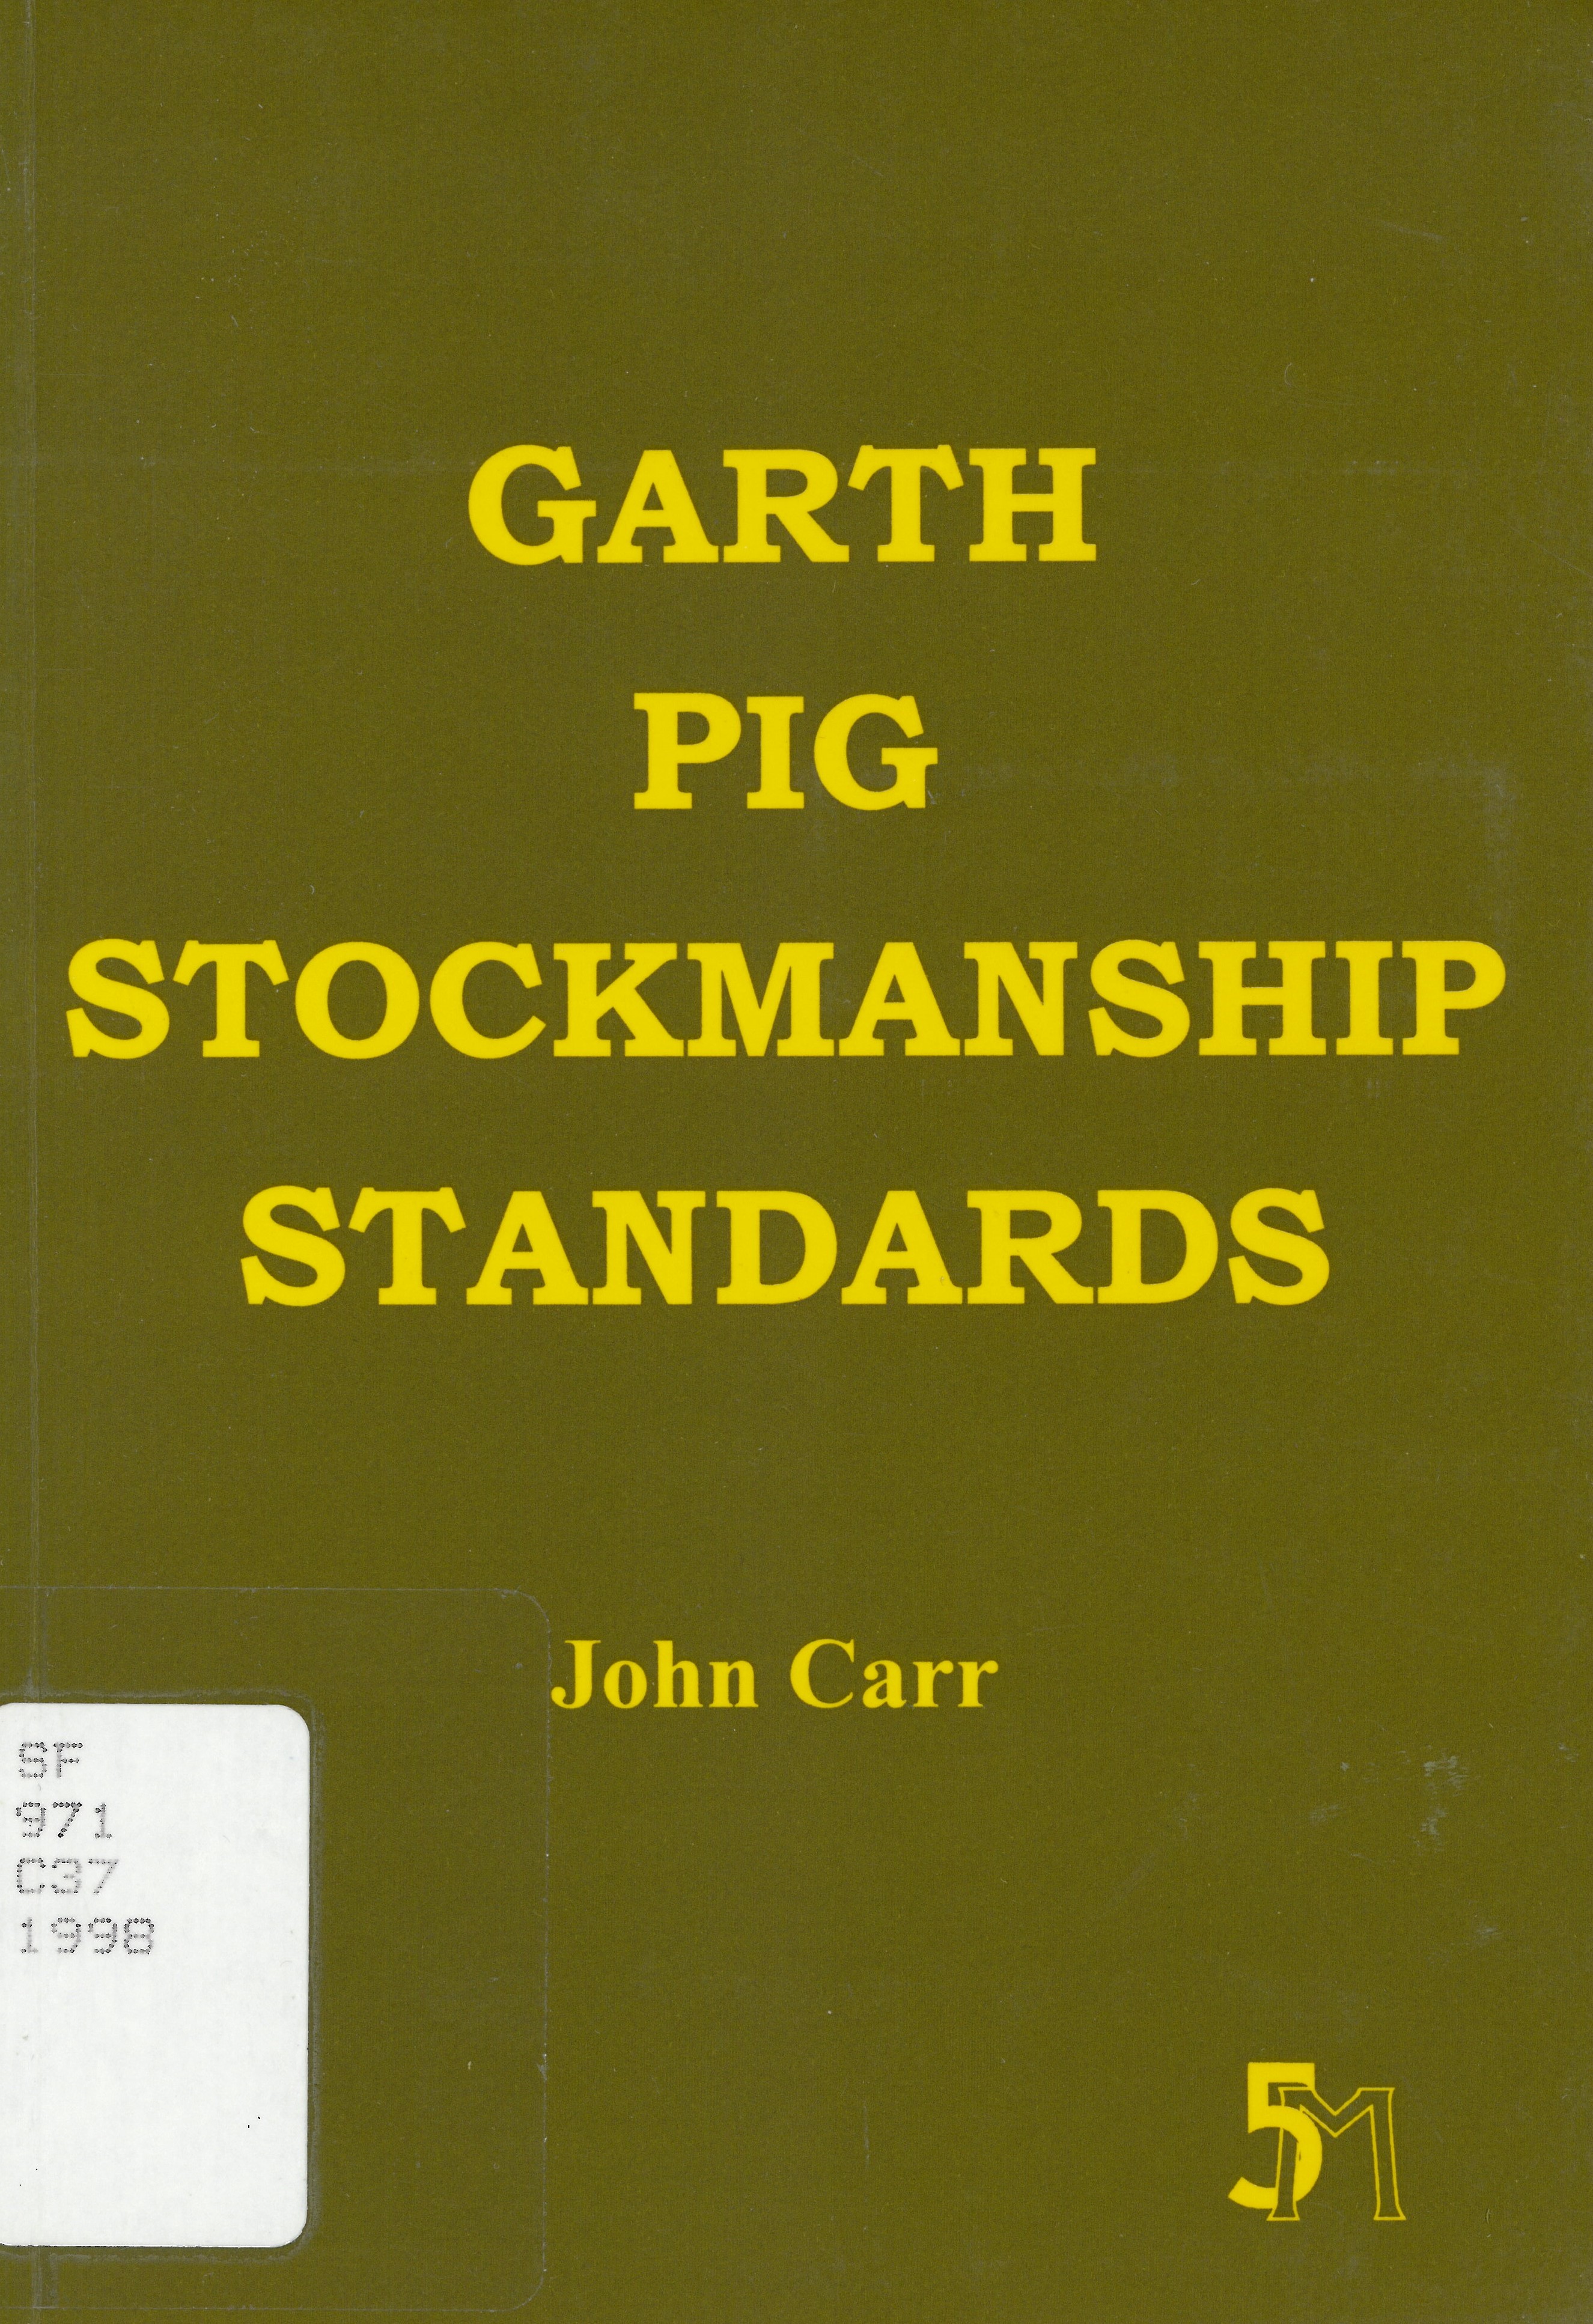 Garth pig stockmanship standards.